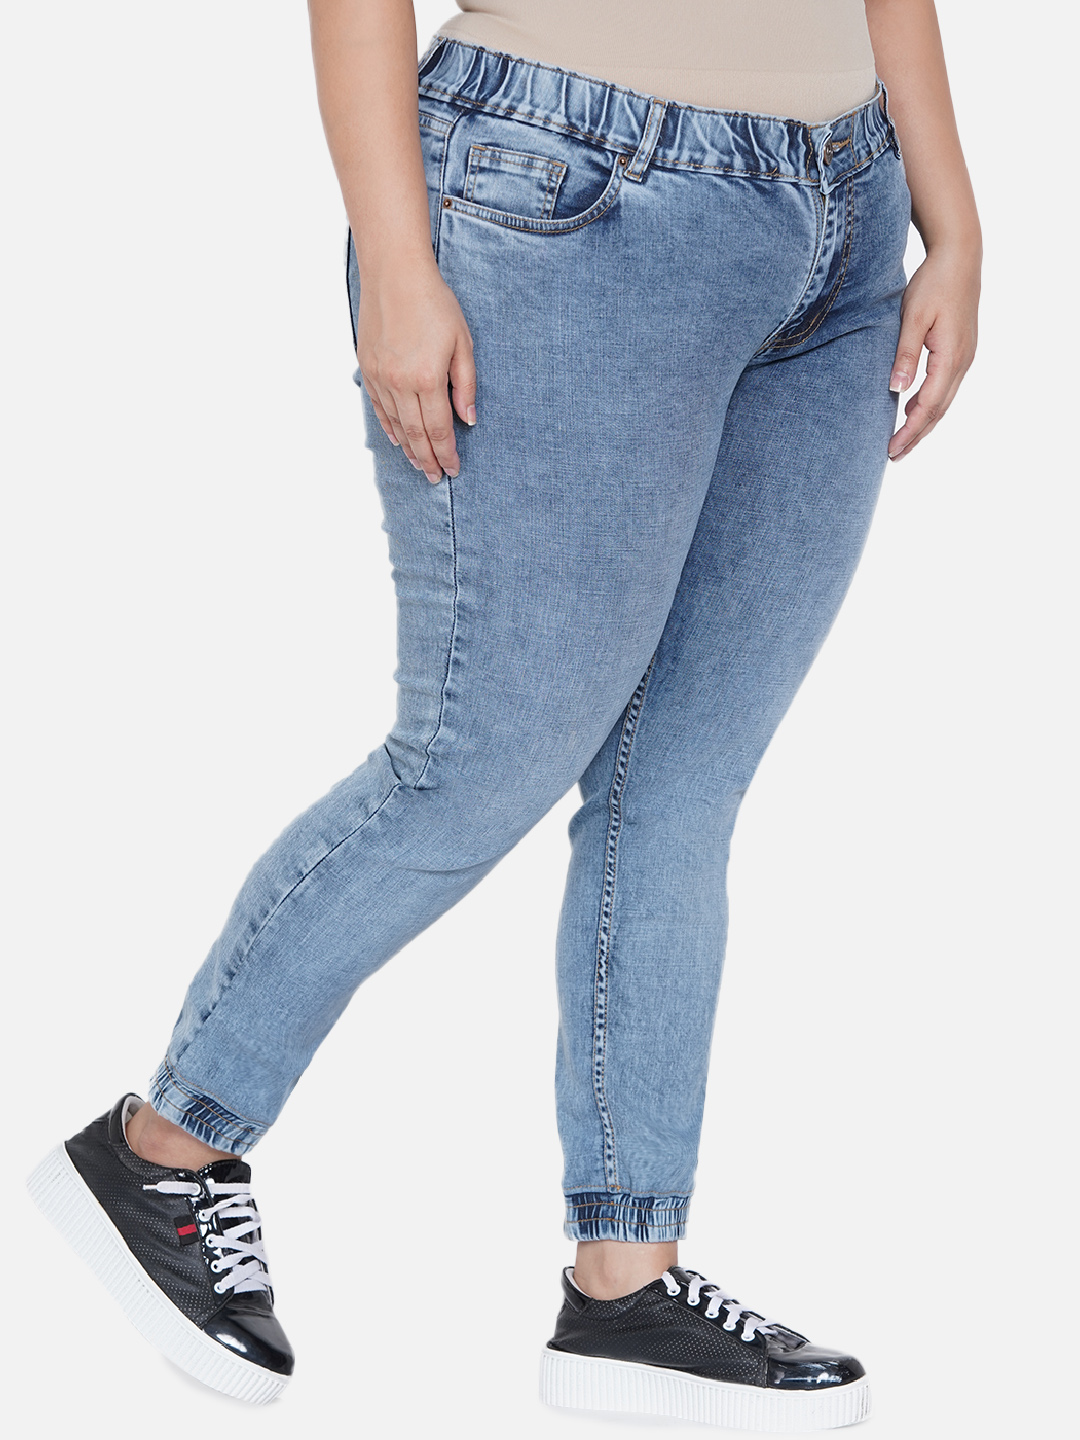 bottomwear_kiaahvi/jeans/KIAJ30/kiaj30-4.jpg